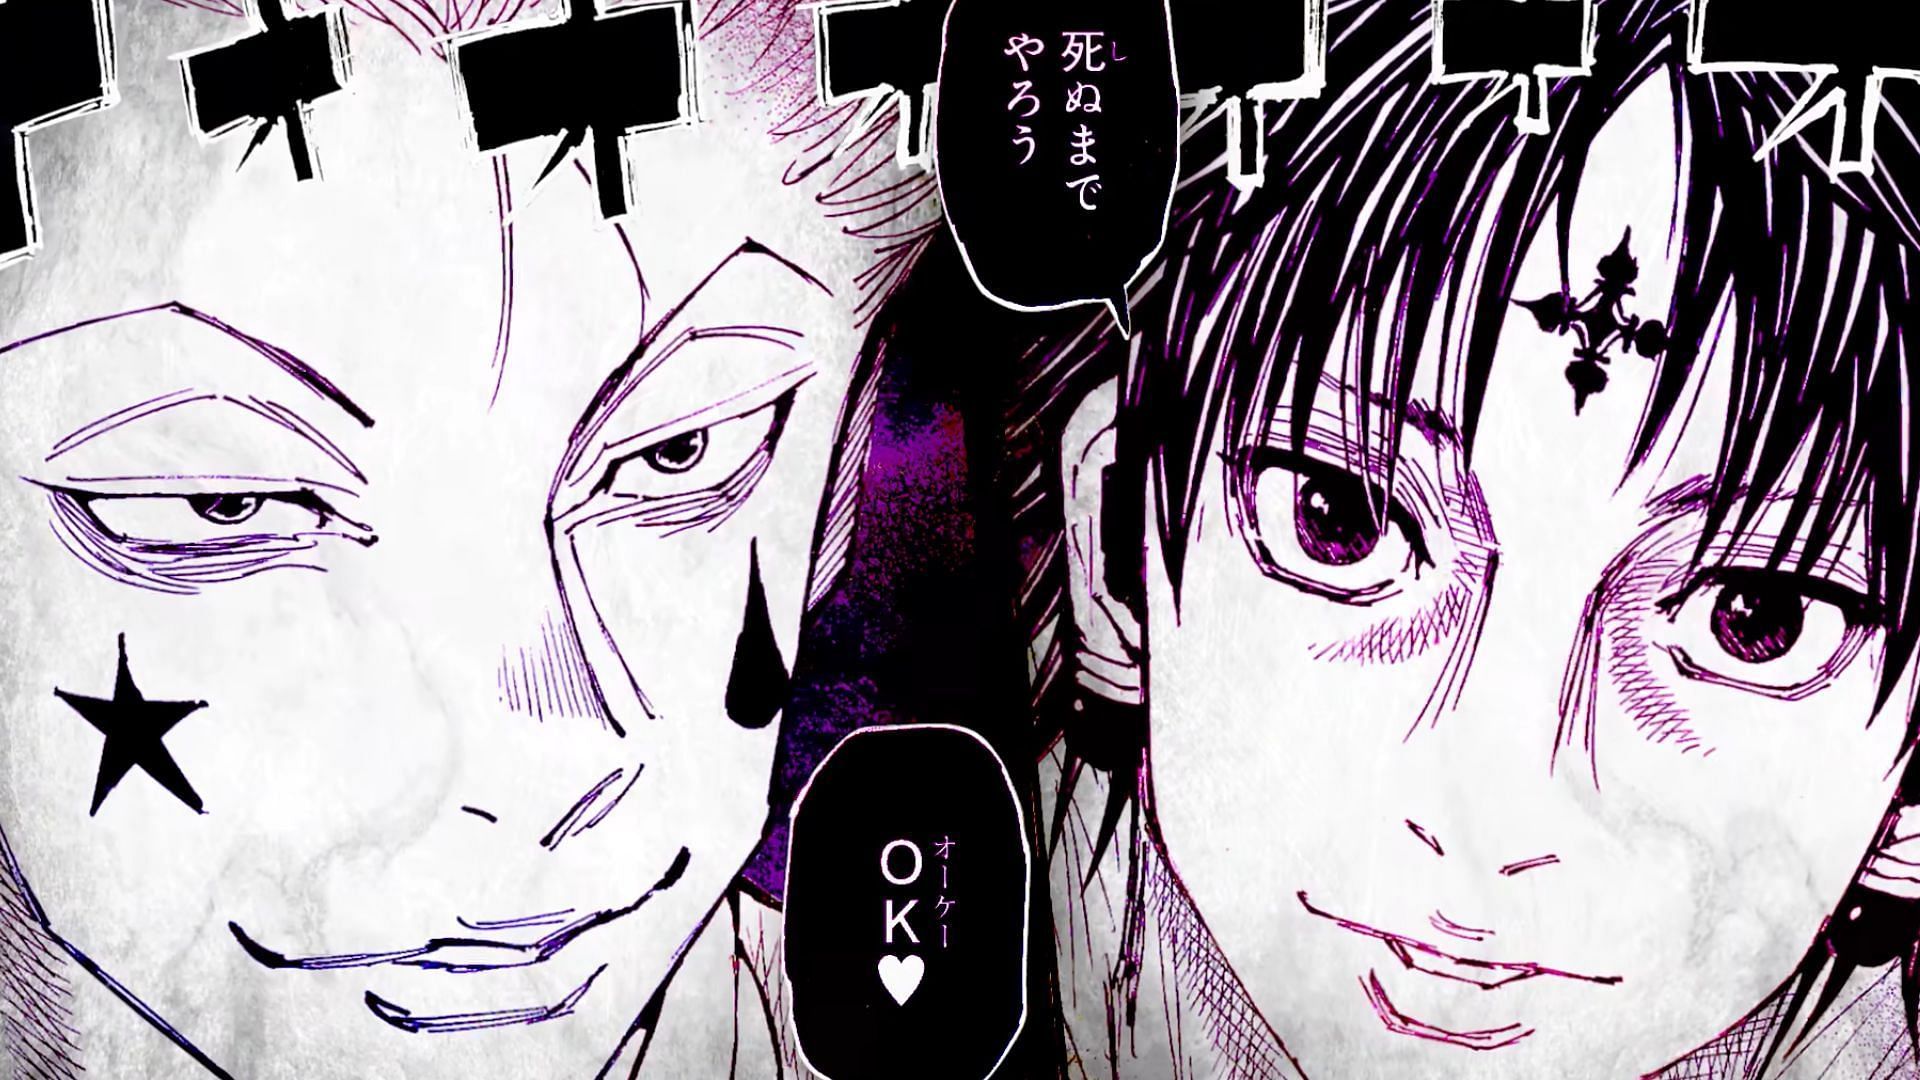 Hisoka and Chrollo as seen in the PV - JUMP COMICS CHANNEL